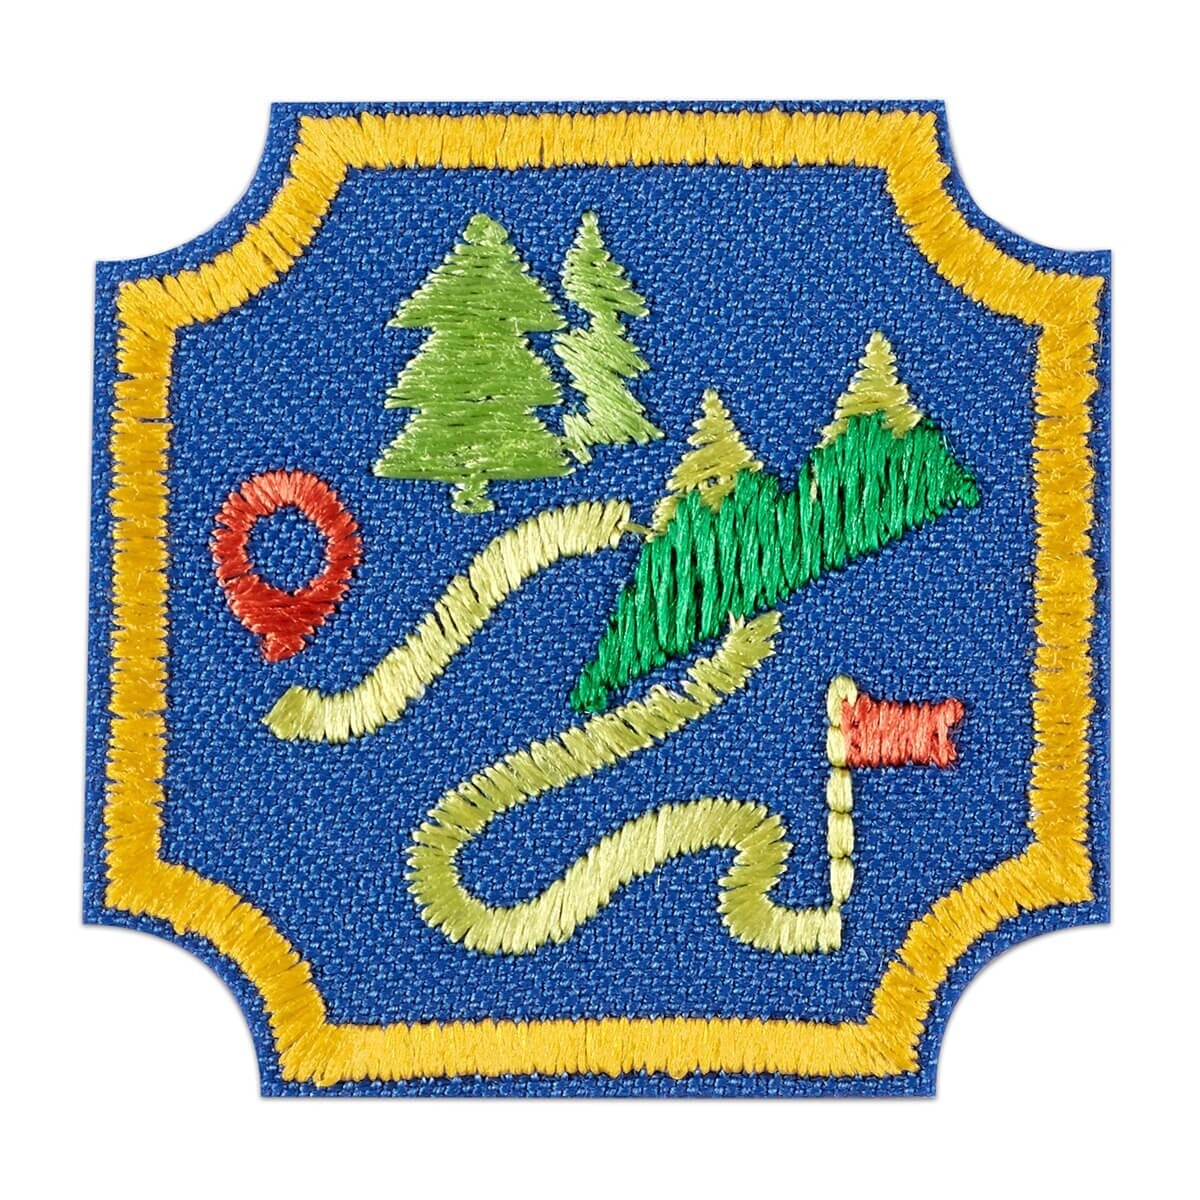 Ambassador Trail Adventure Badge